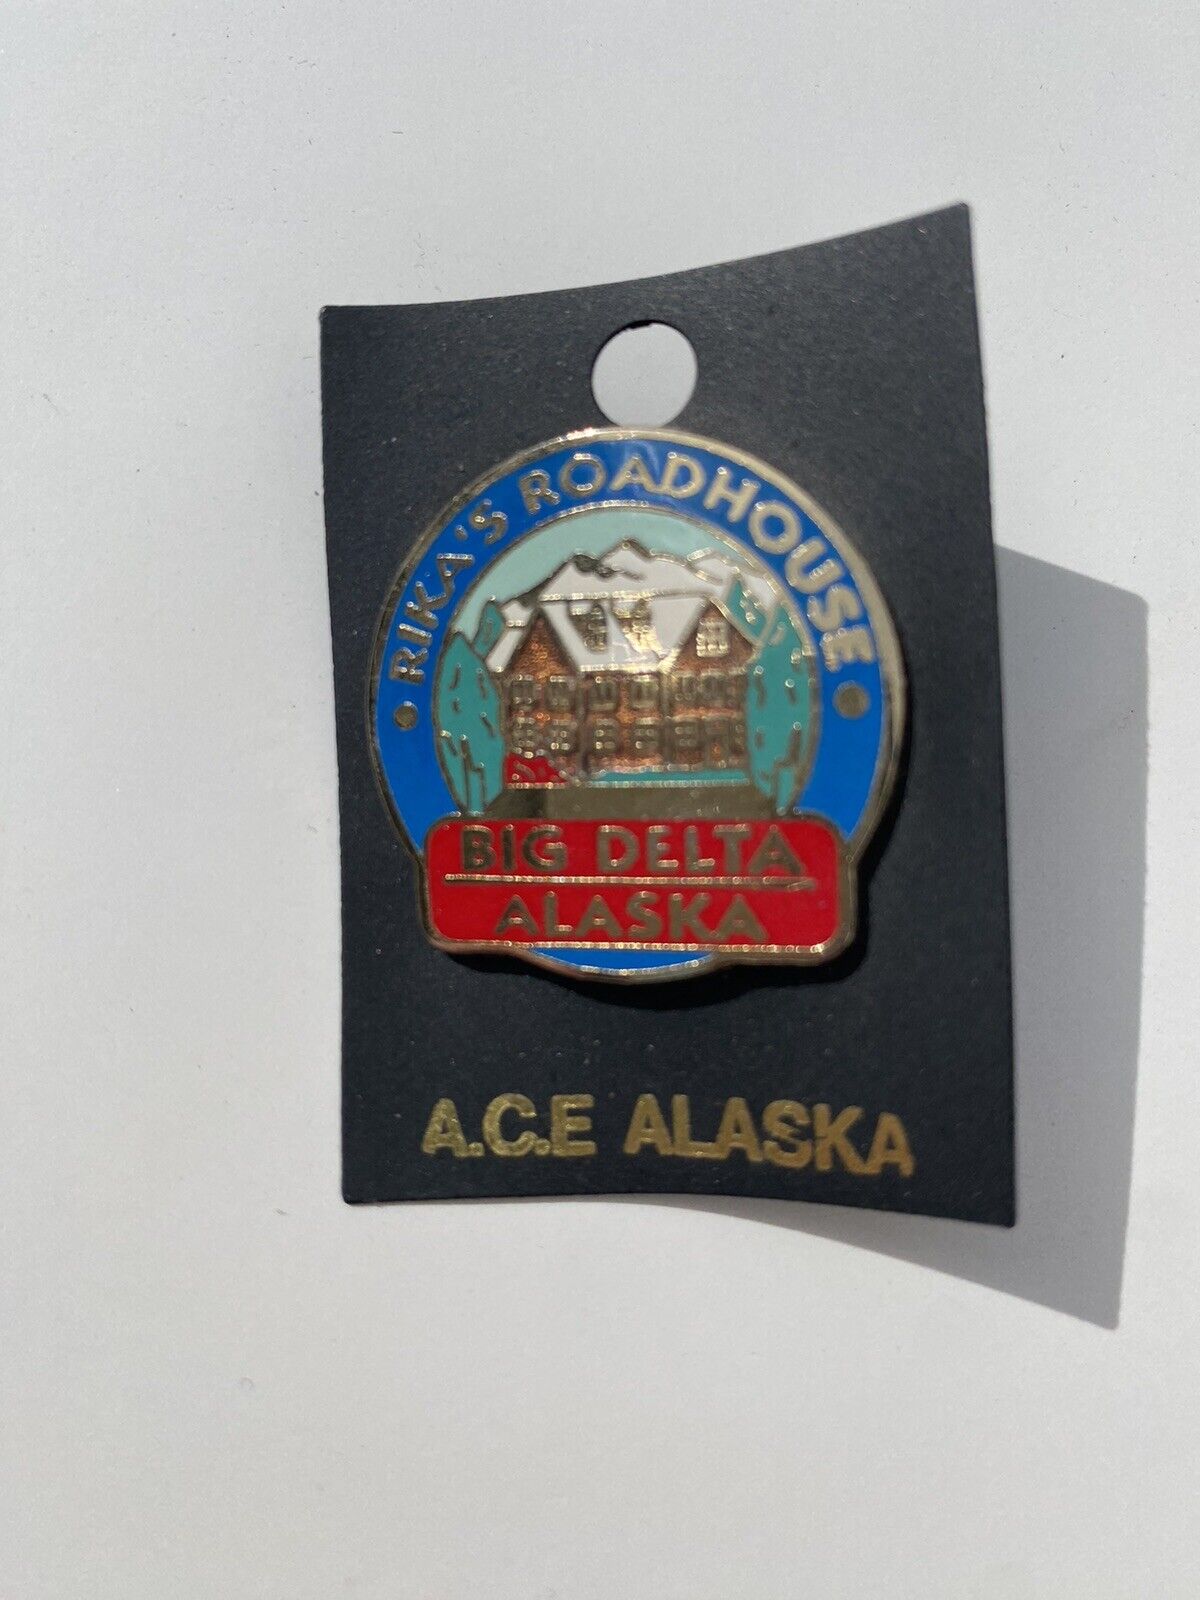 RIKA’S Roadhouse Big Delta Alaska Hat Pin Lapel Pin Travel Souvenir - 